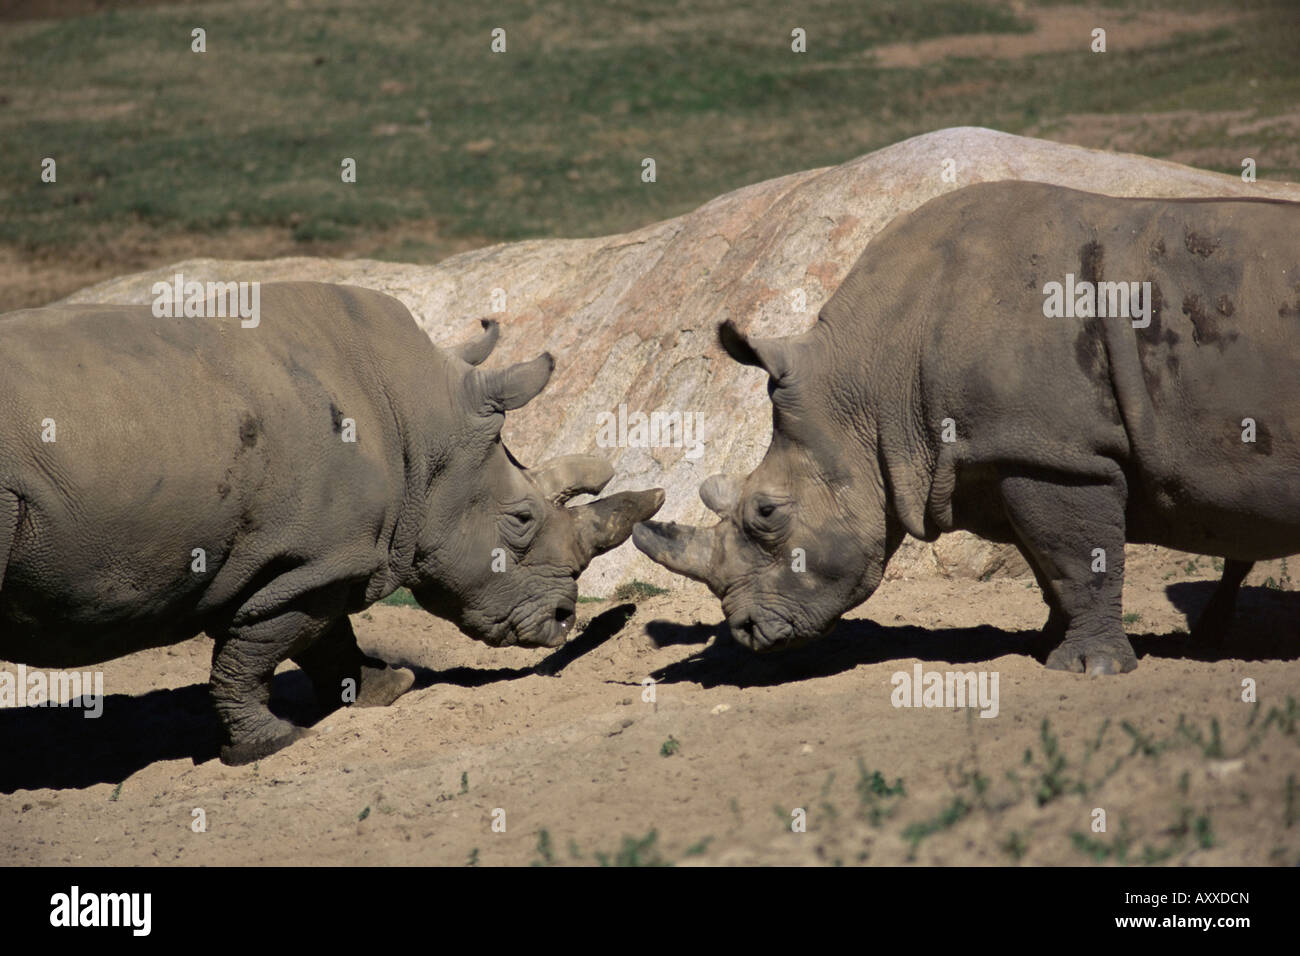 East African rinoceronte nero (rinoceronti) sparring, San Diego Wild Animal Park, California, Stati Uniti d'America, America del Nord Foto Stock